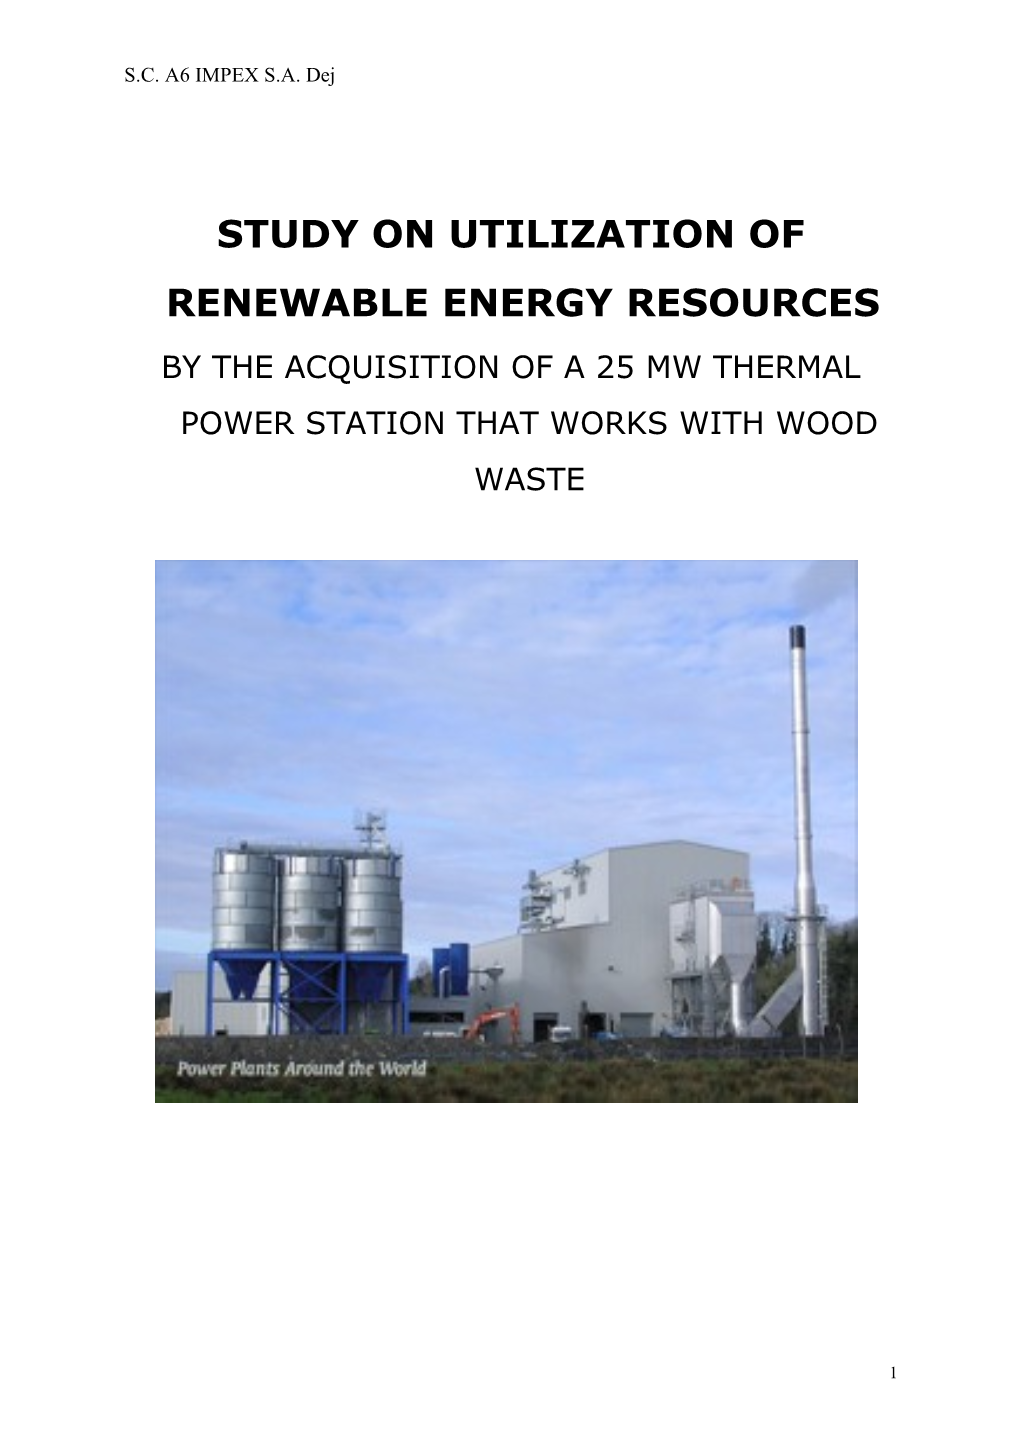 Study on Utilization of Renewable Energy Resources